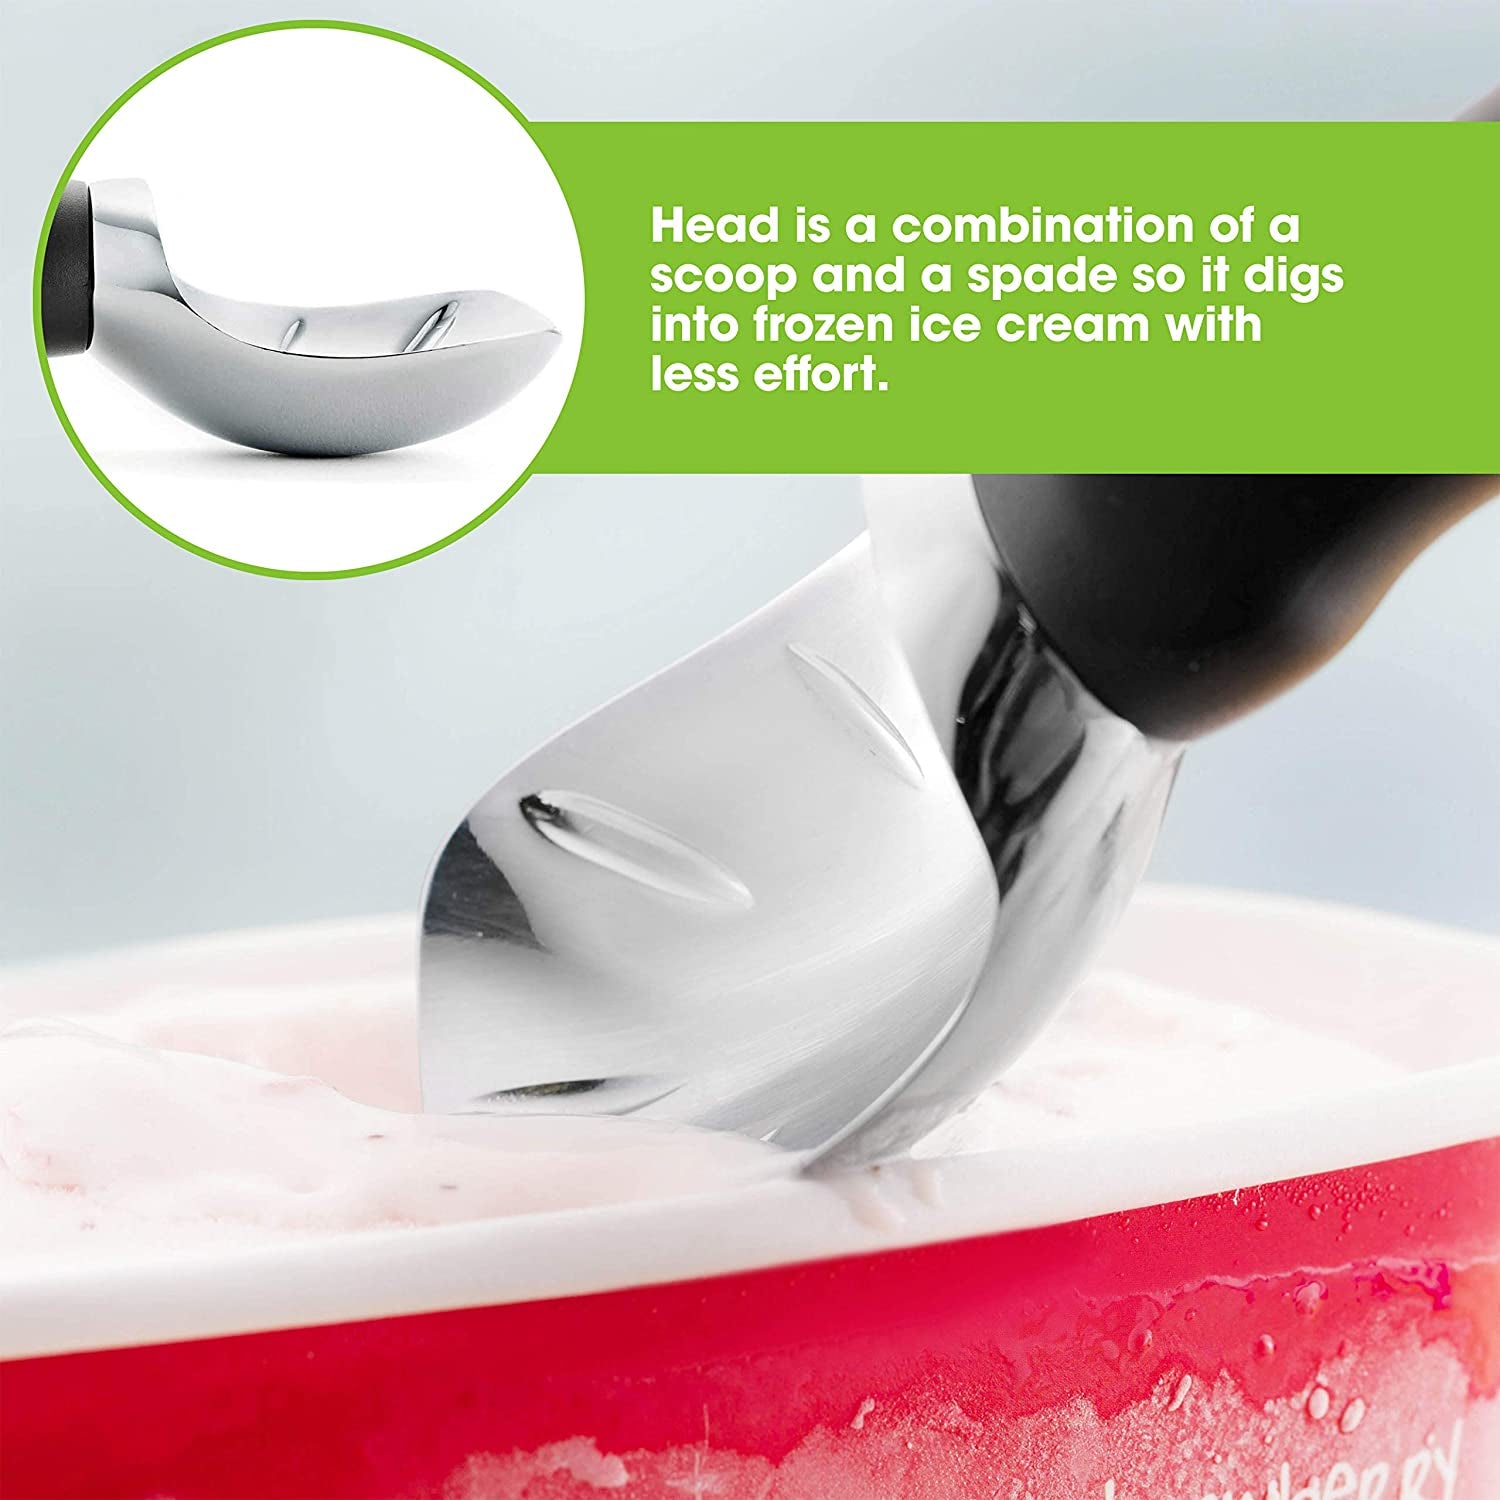 Heavy-duty ice cream scoop with comfortable handle